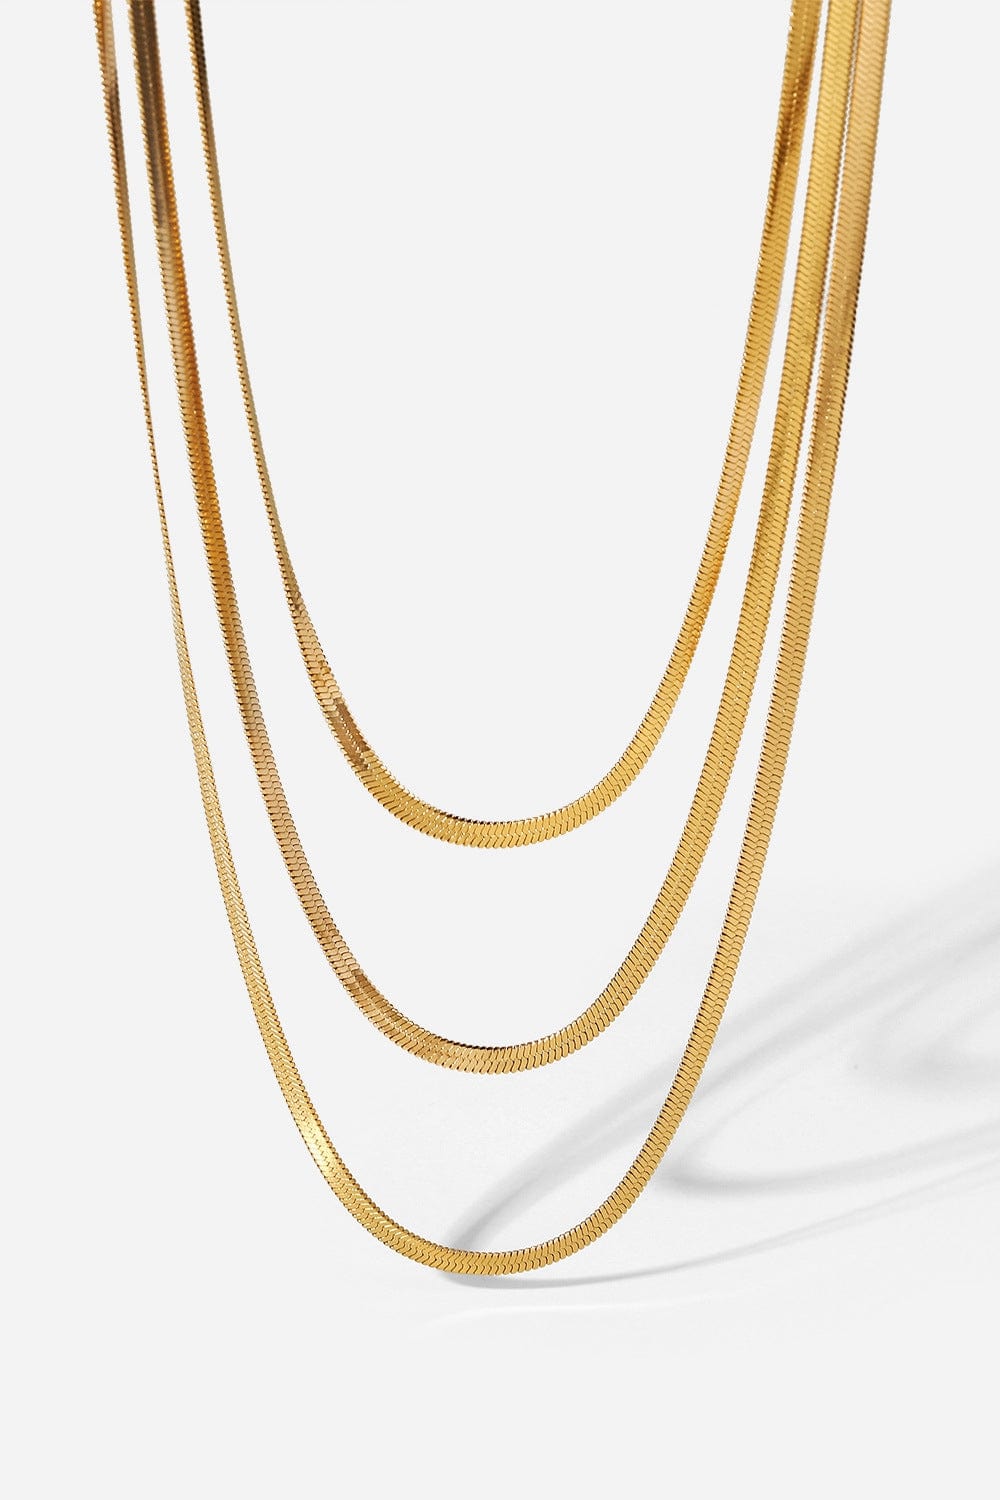 Triple-Layered Snake Chain Necklace - Body By J'ne